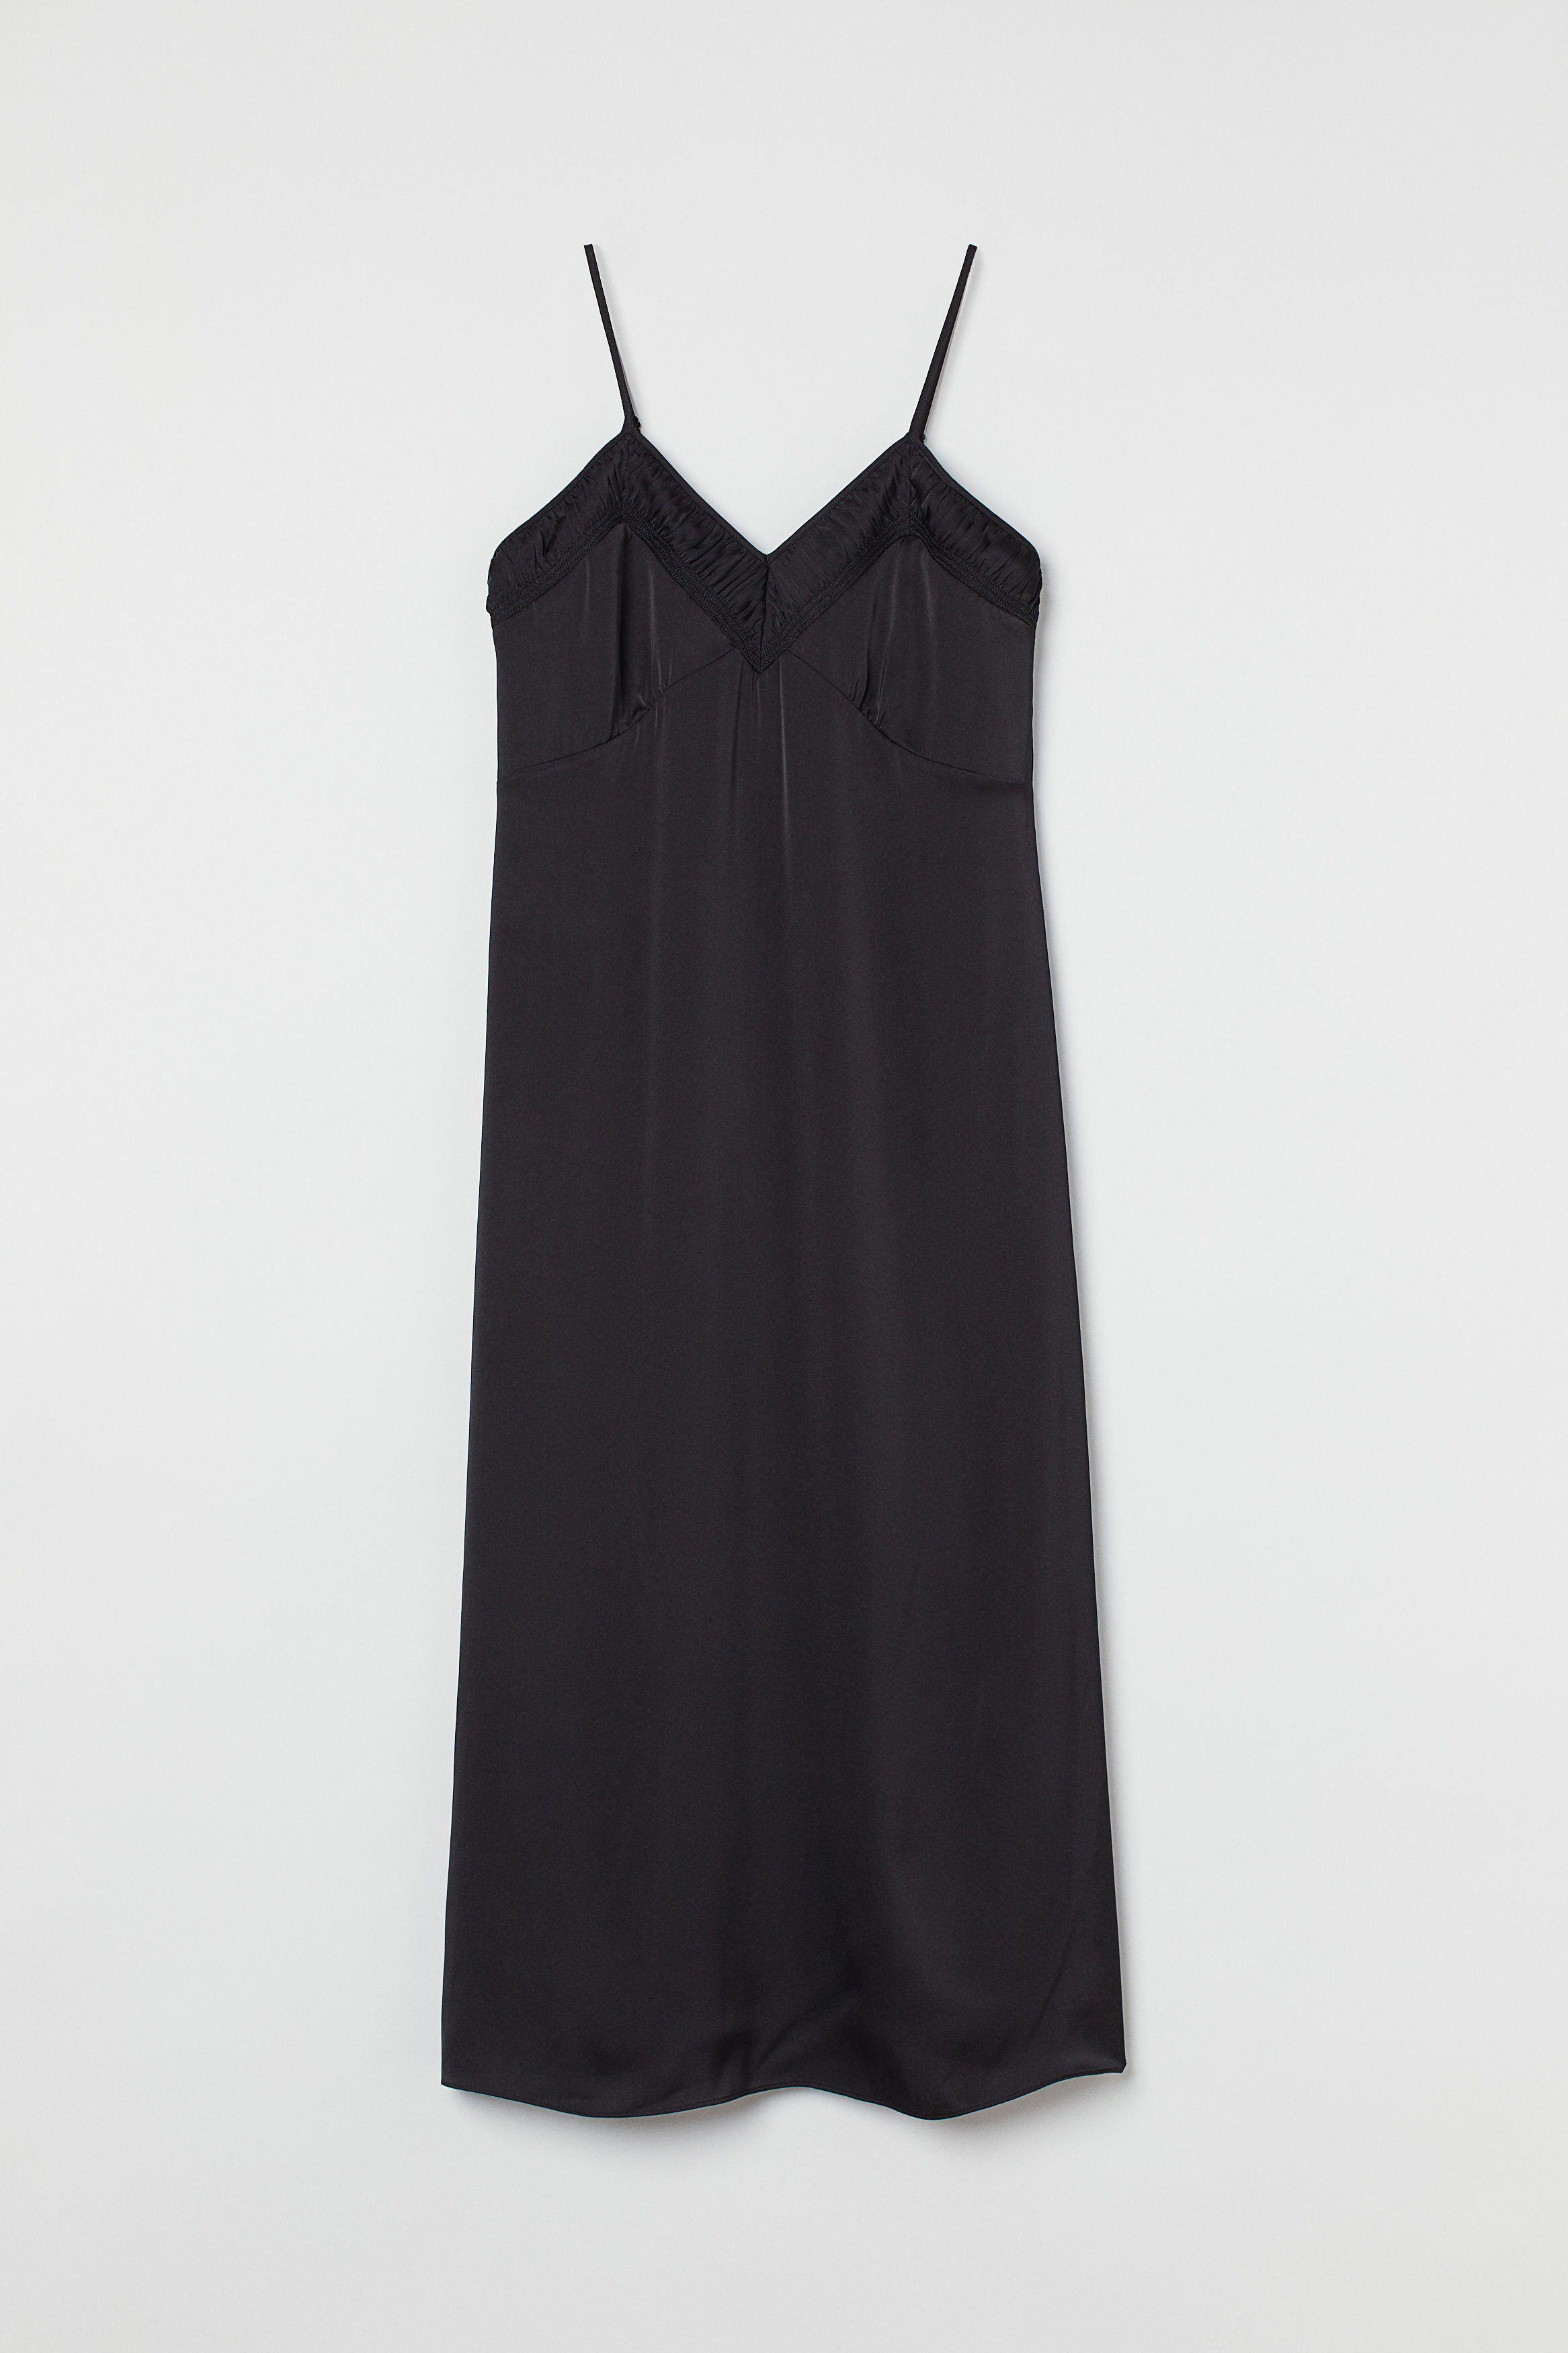 DAMEN Kleider Casuales Kleid Slip dress Schwarz XS Zara Casuales Kleid Rabatt 50 % 